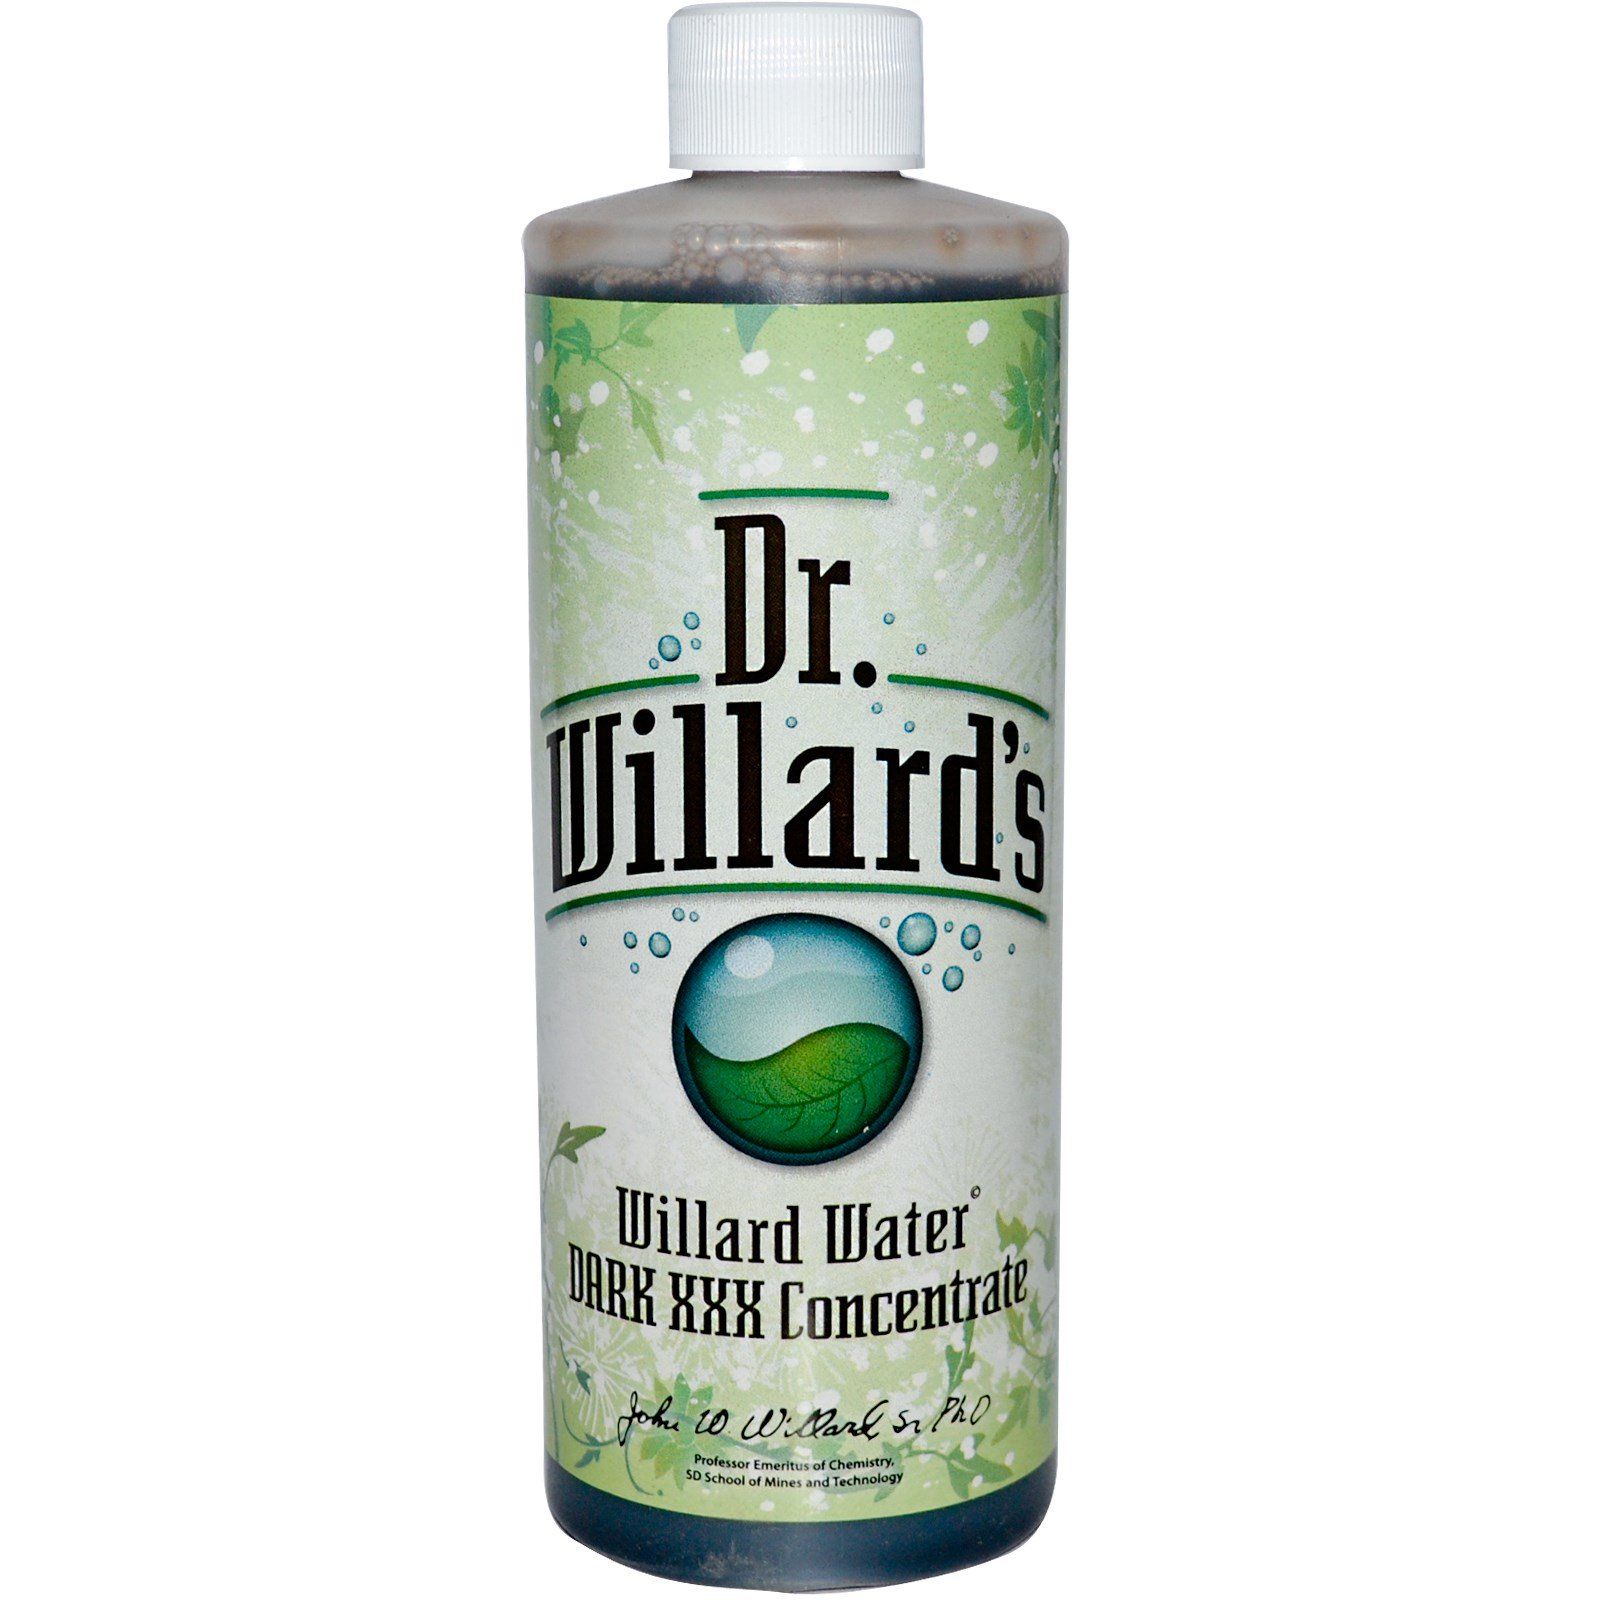 Willard Willard Water темный концентрат XXX 16 унций (0,473 л)